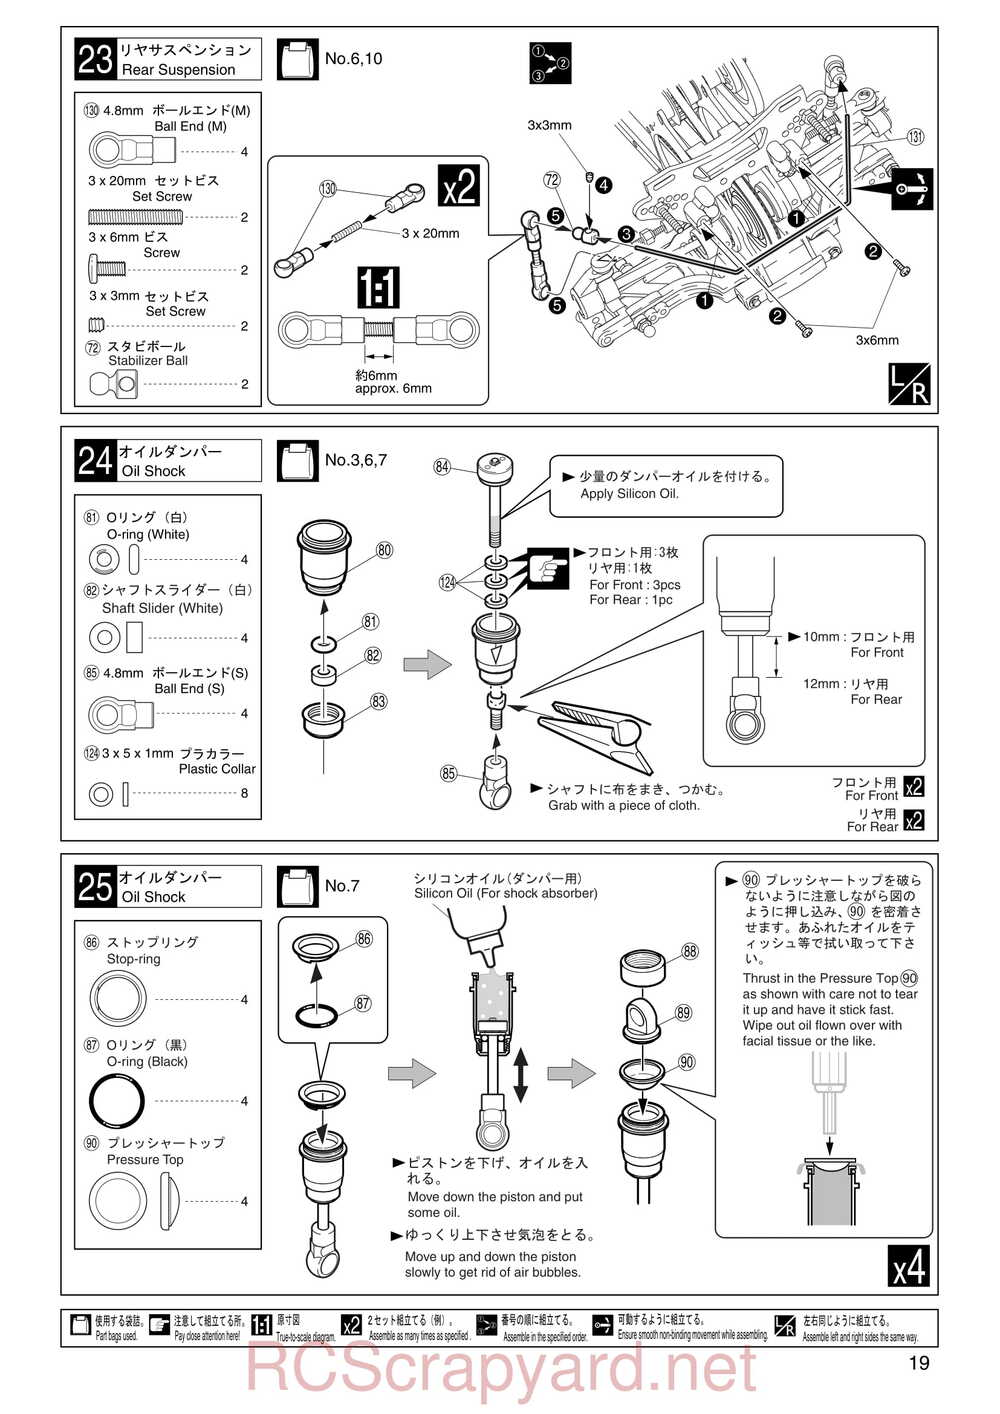 Kyosho - 30101 - KX-One - Manual - Page 19